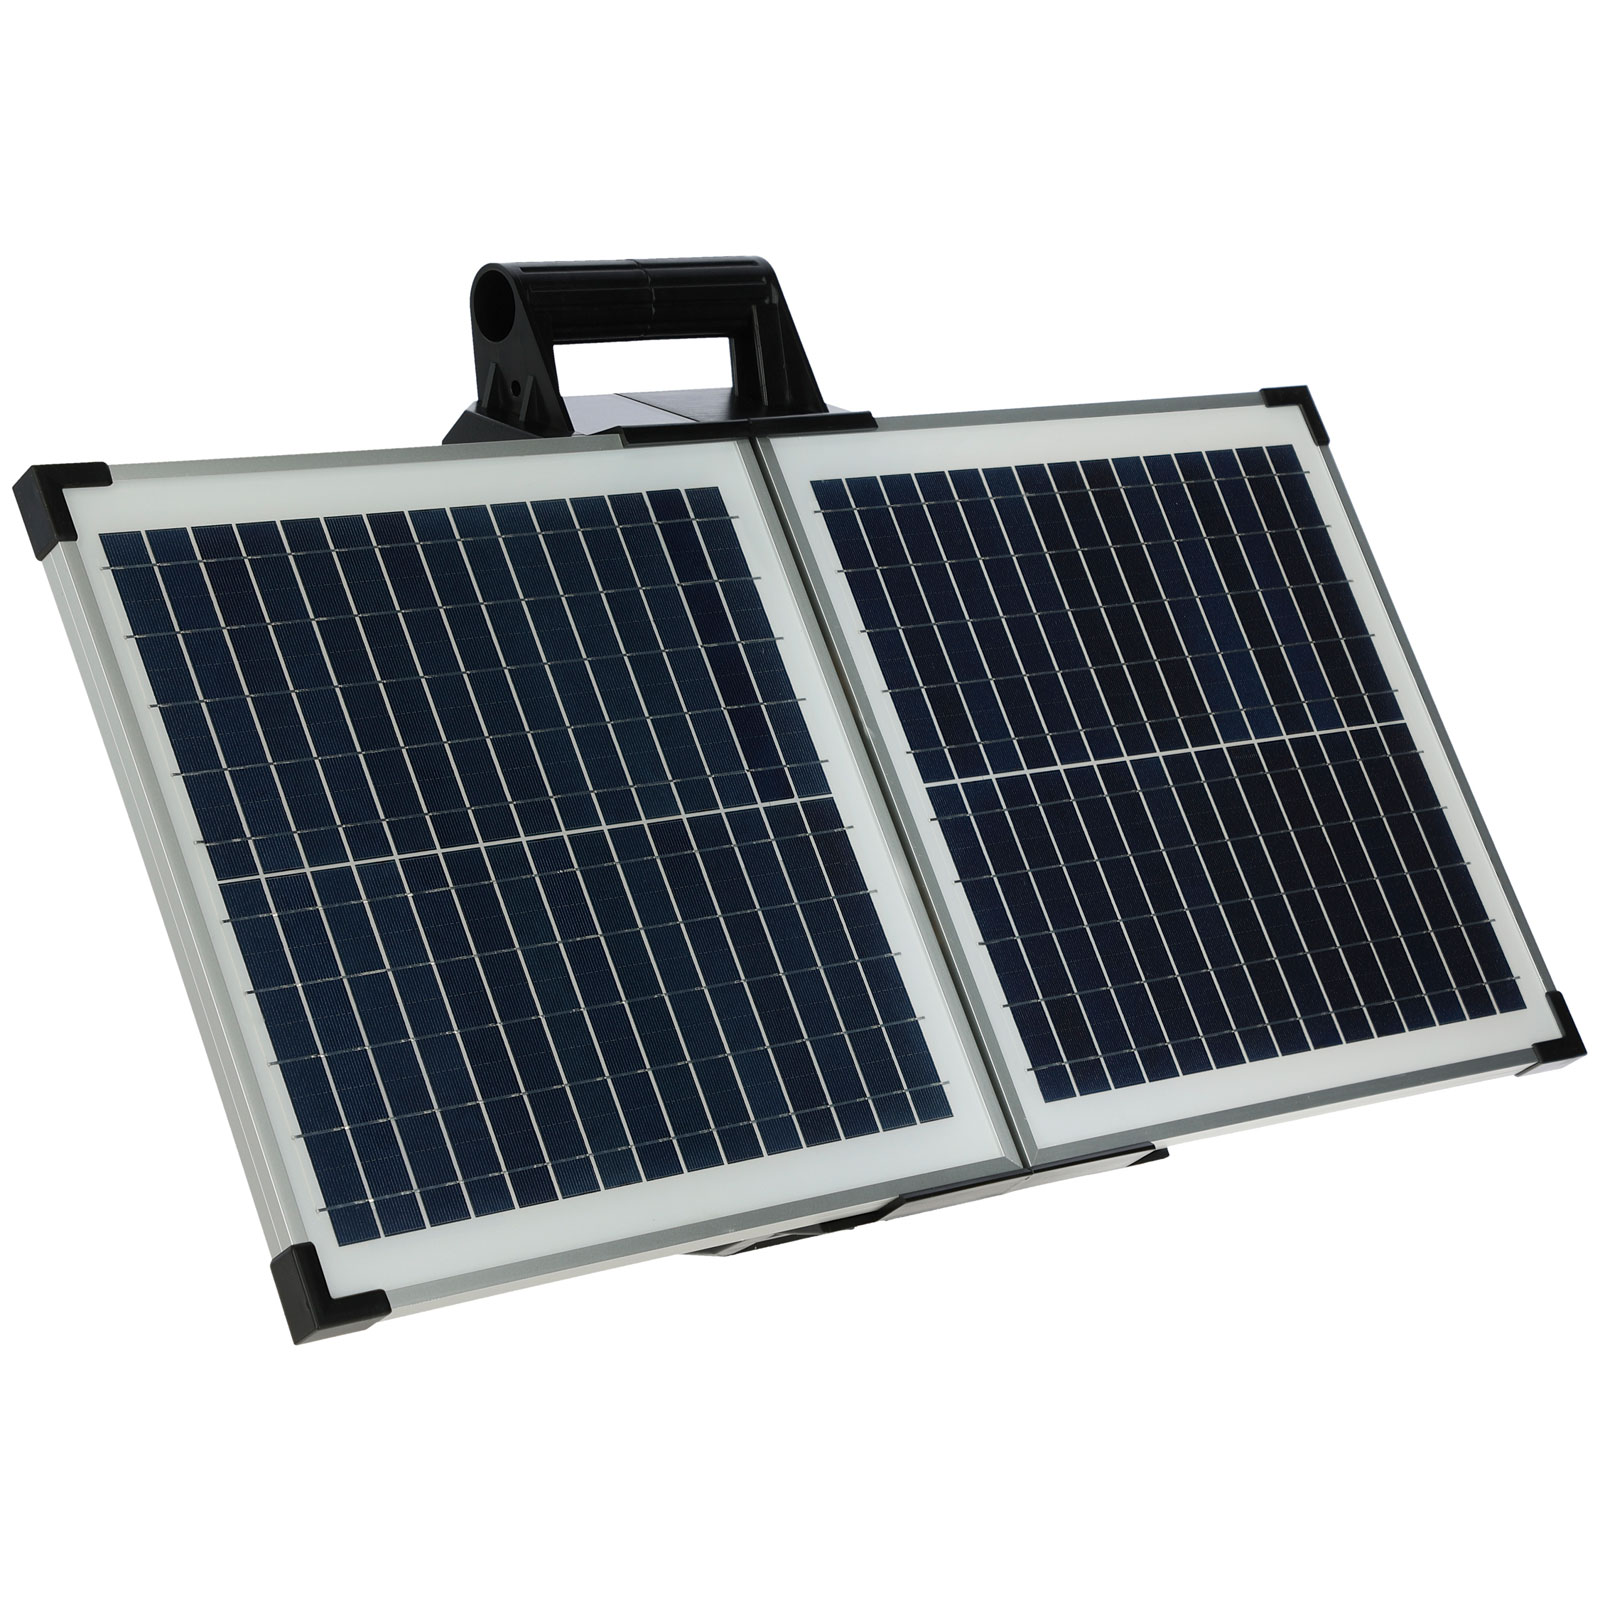 Agrarzone kit recinto anti lupo fotovoltaico Sun Power S 3000 12v, 4,2J, rete 400 m x 122cm, bianco